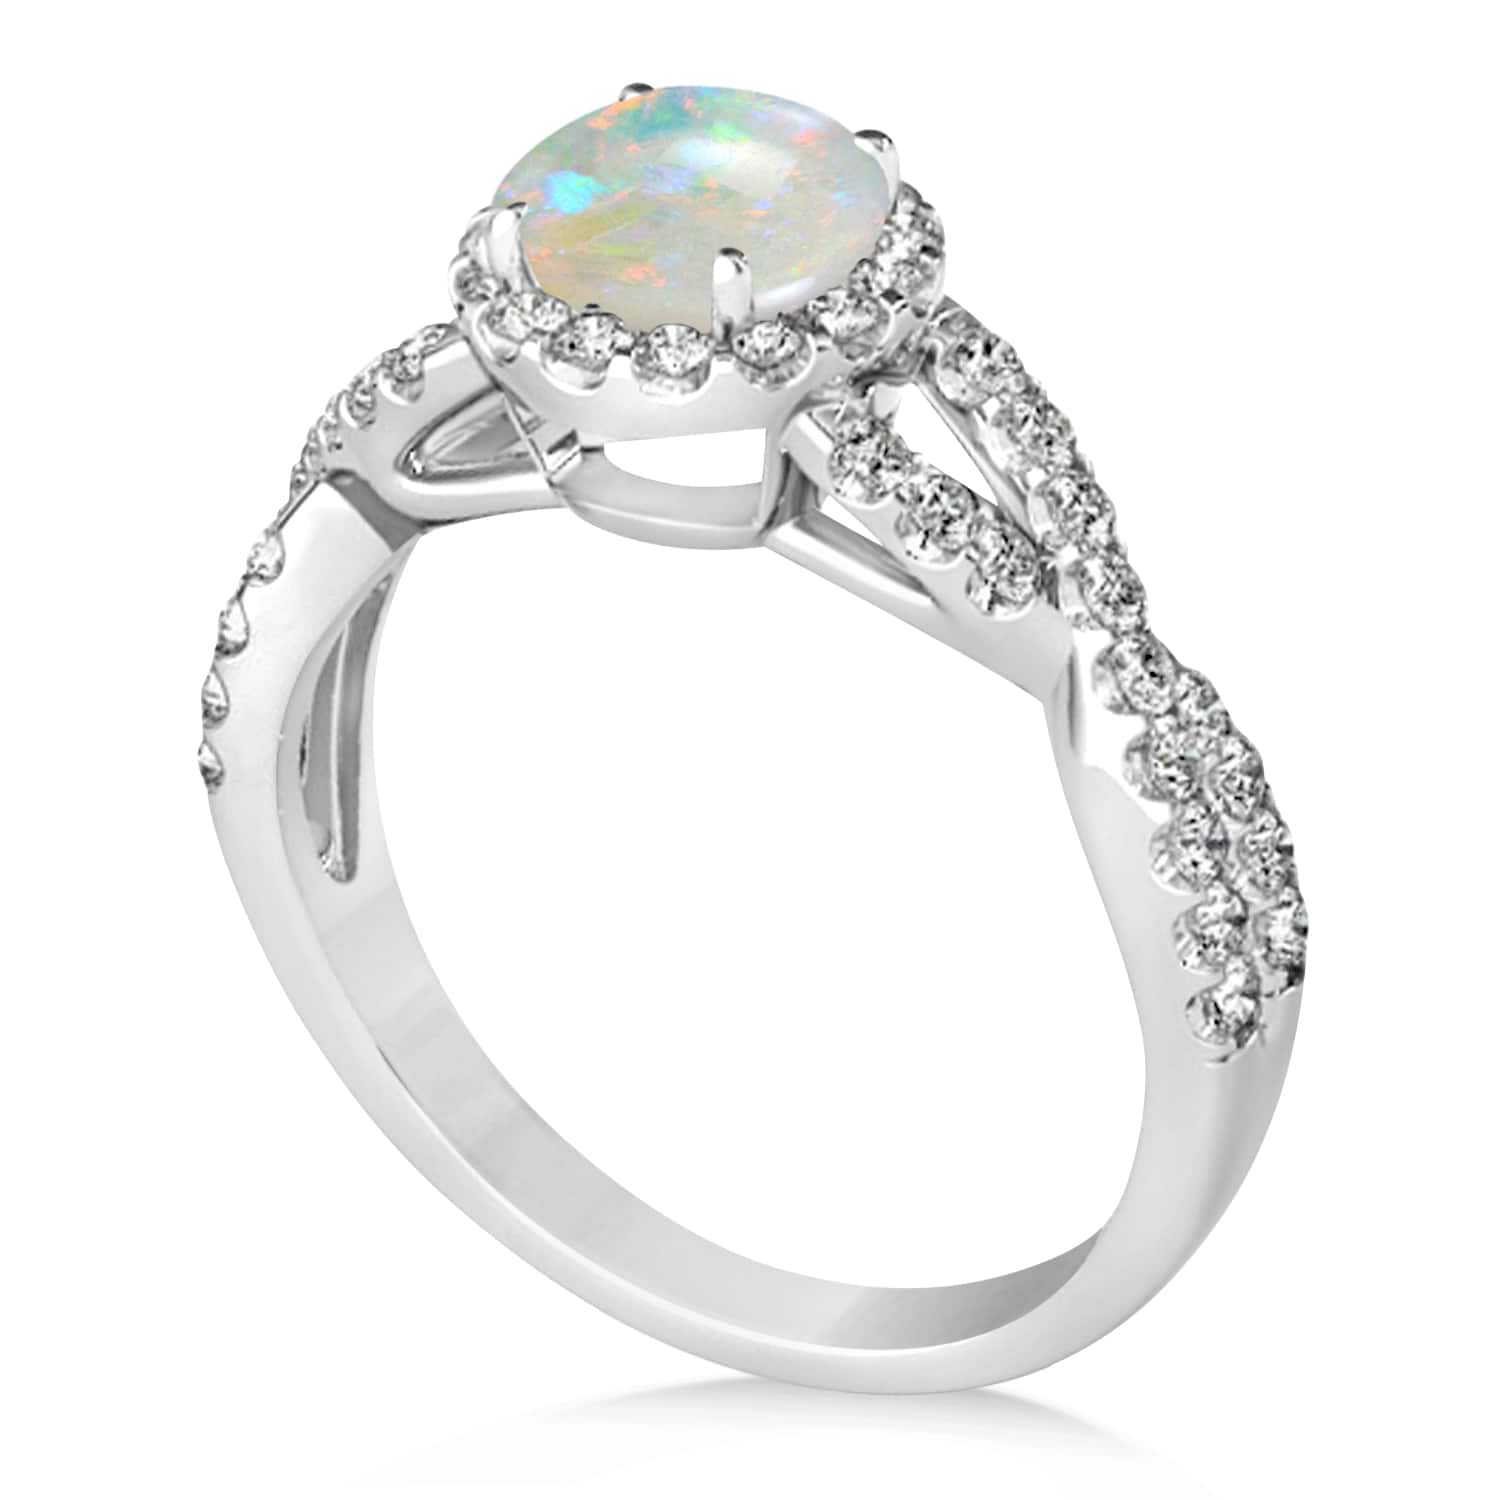 Opal & Diamond Twisted Engagement Ring Platinum 1.07ct